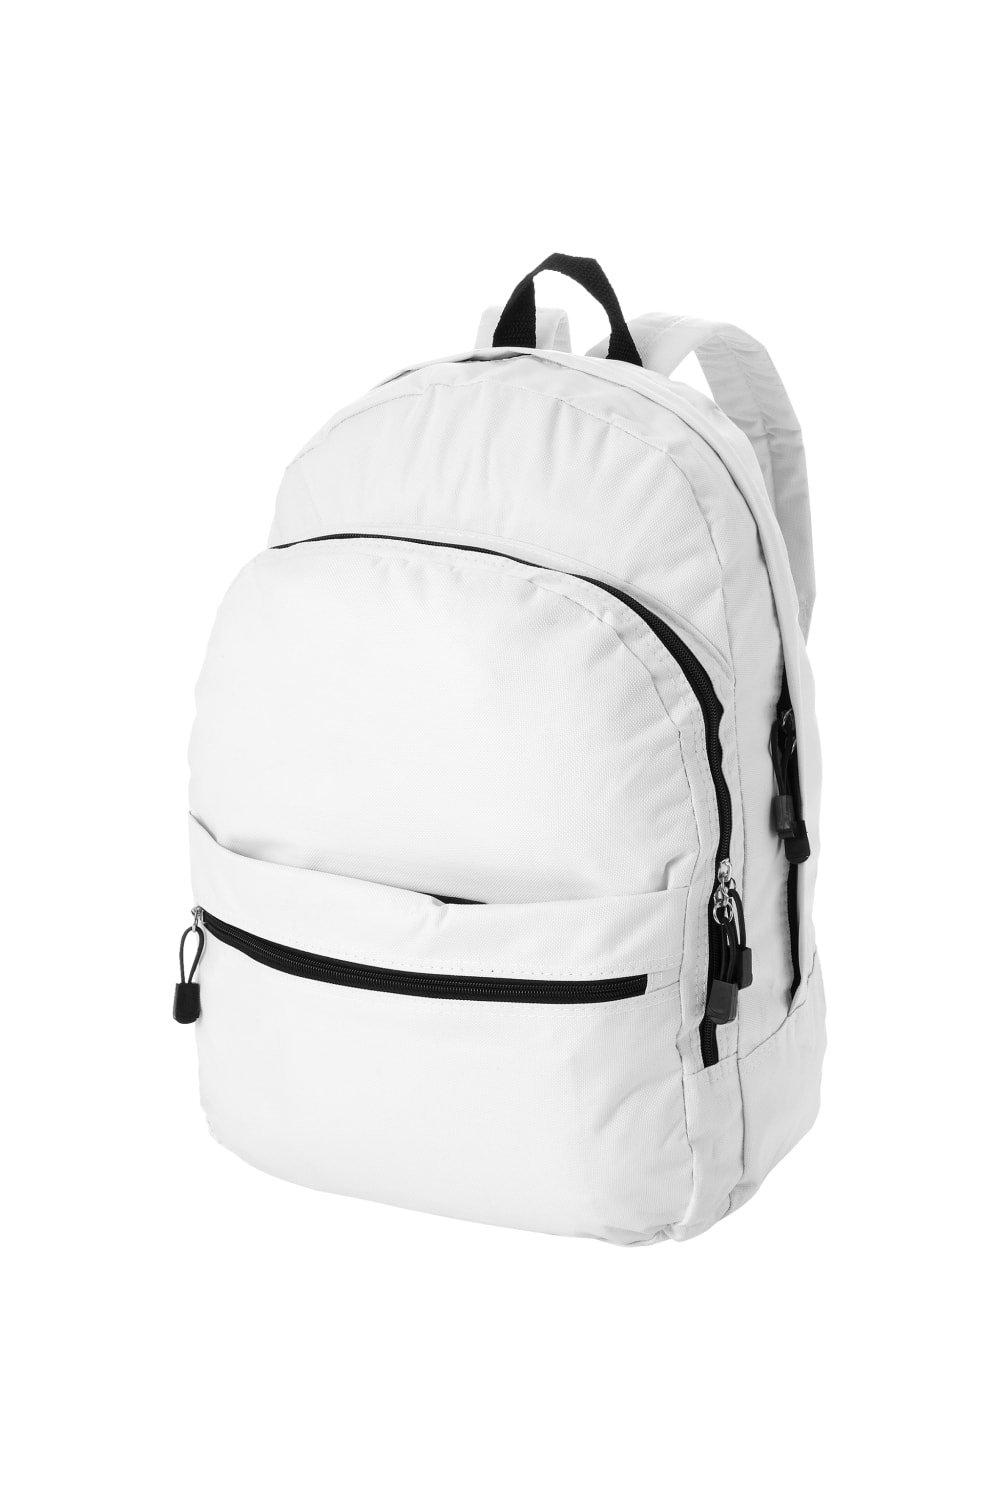 Рюкзак Trend (2 шт.) Bullet, белый рюкзак с карманом единорог 1 шт